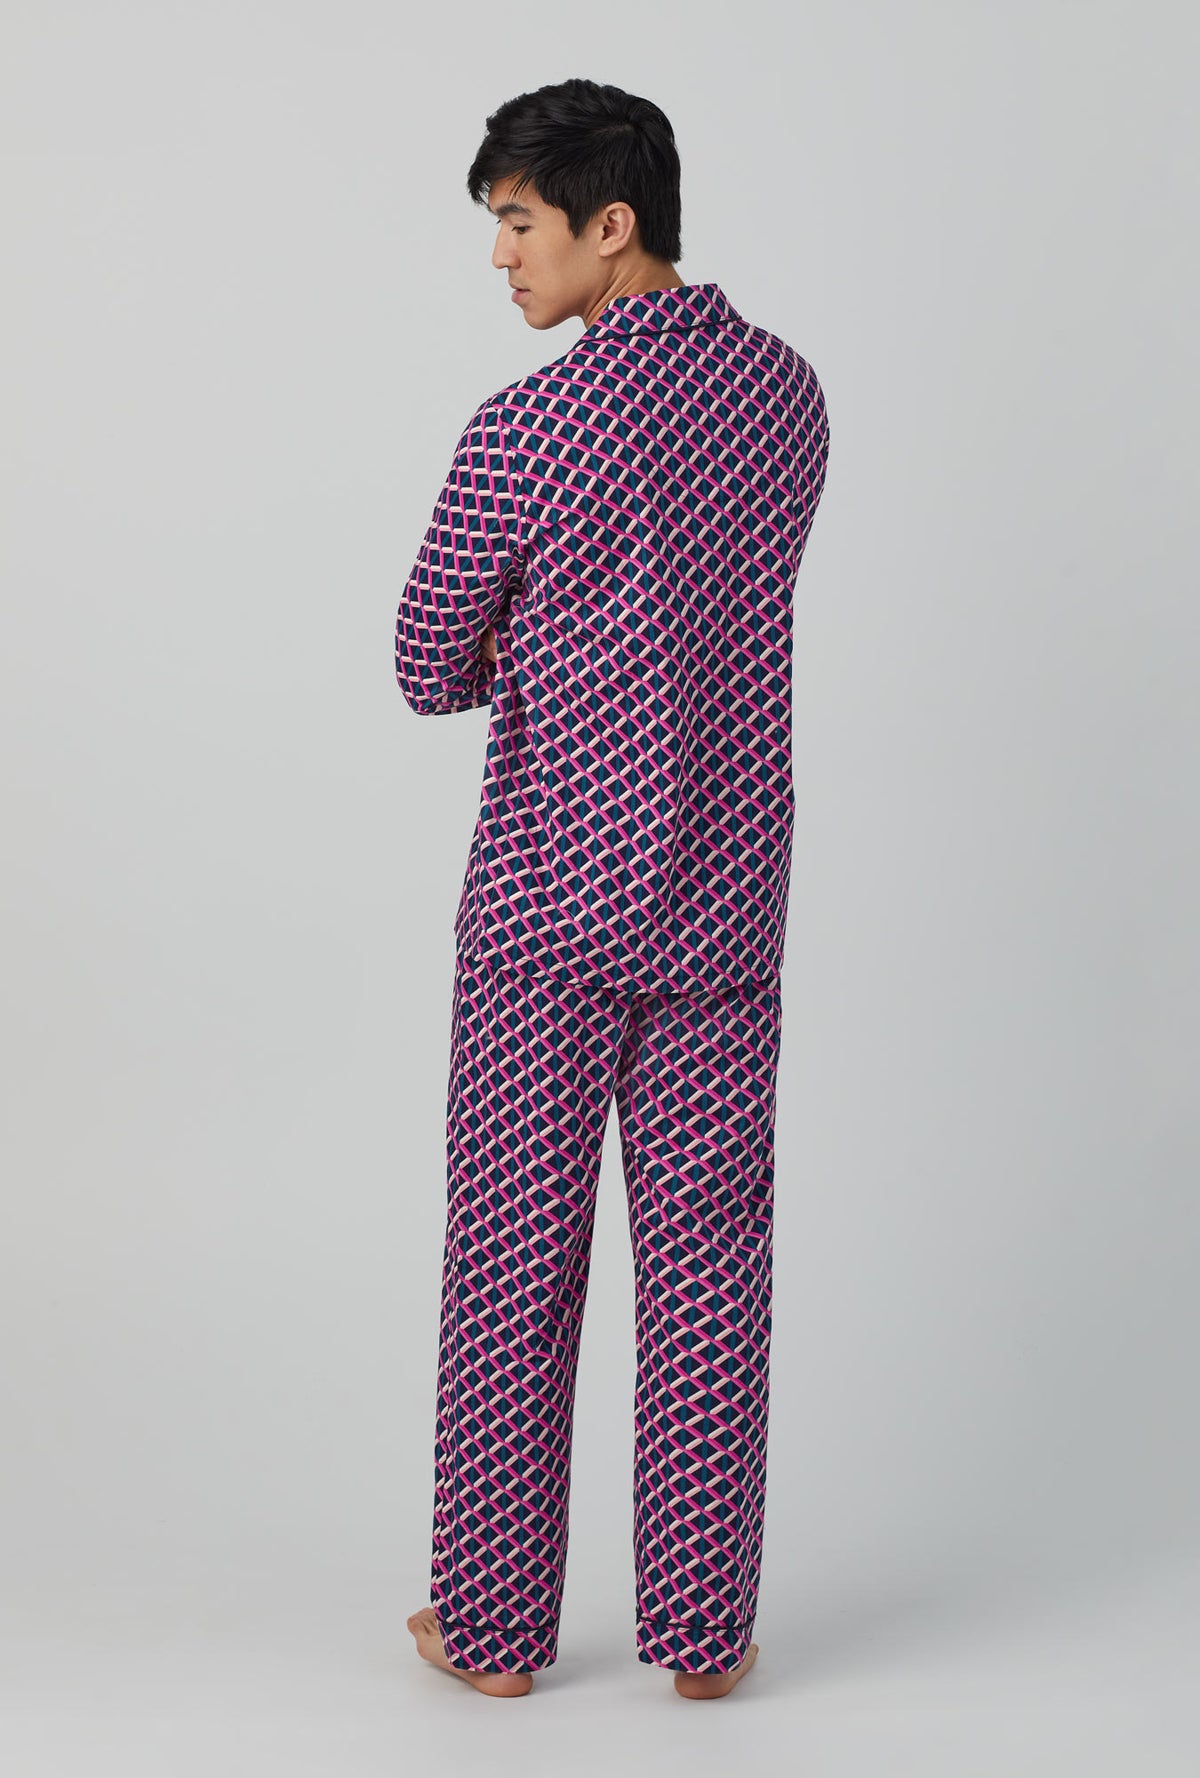 A man wearing long sleeve classic woven cotton poplin pj set with Mr. turk lattice geo print.